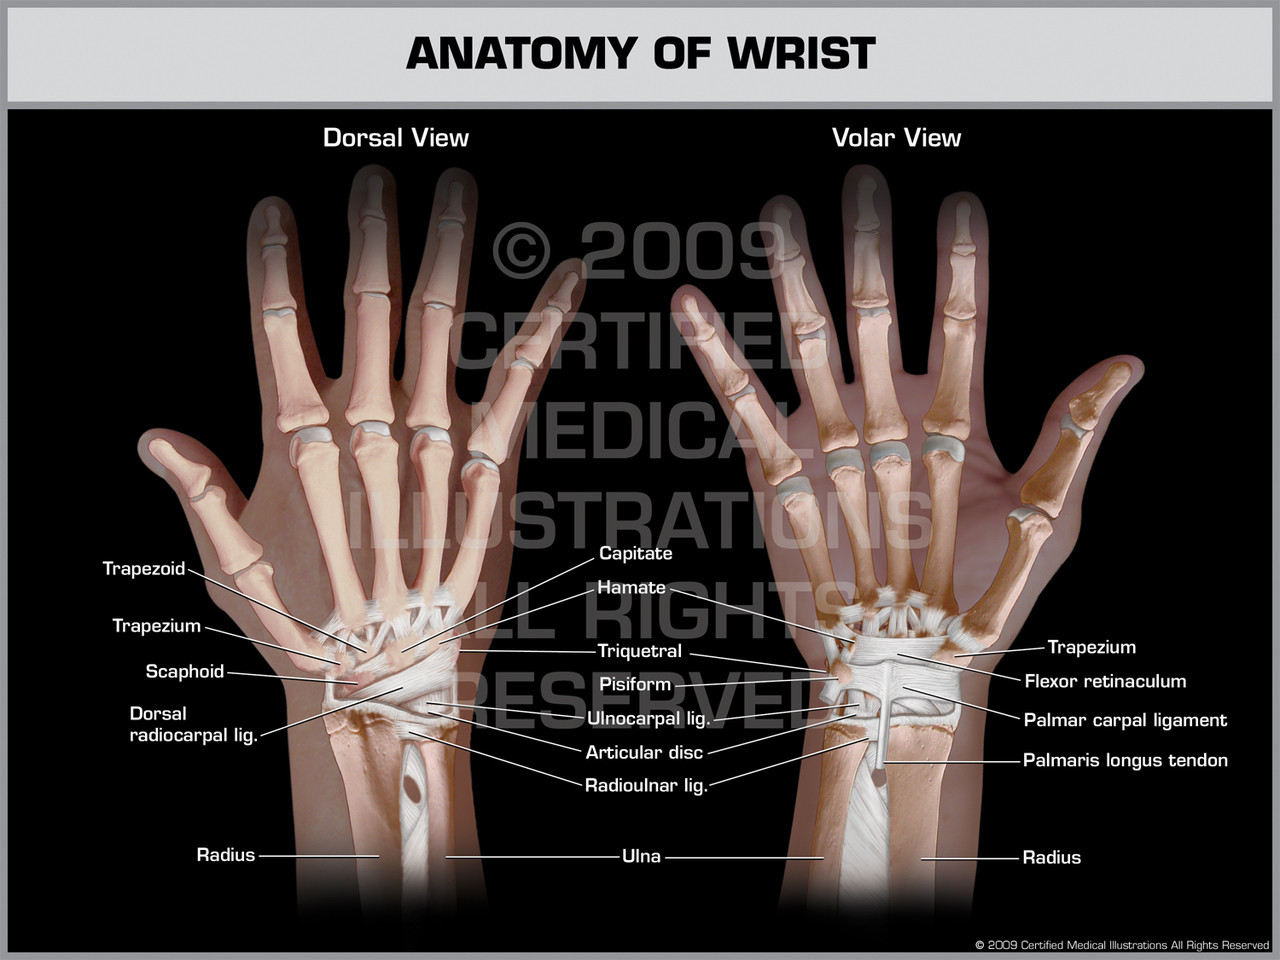 Anatomy of Wrist